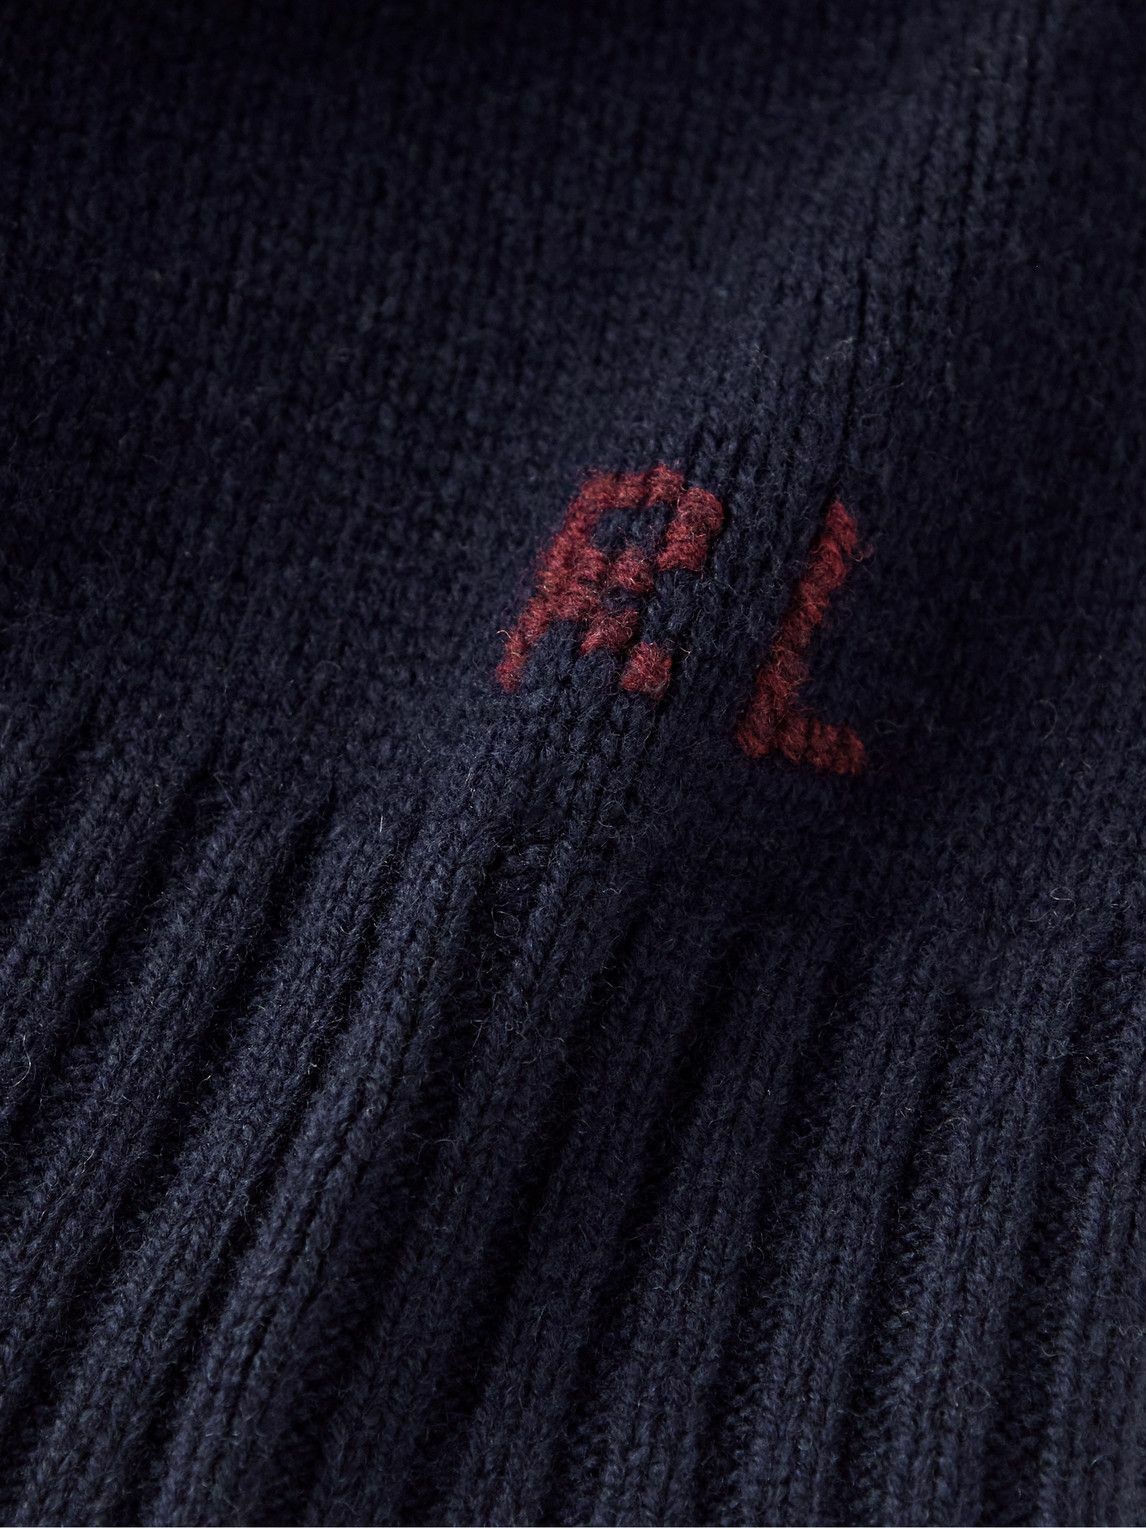 Polo Ralph Lauren - Logo-Jacquard Wool Sweater - Blue